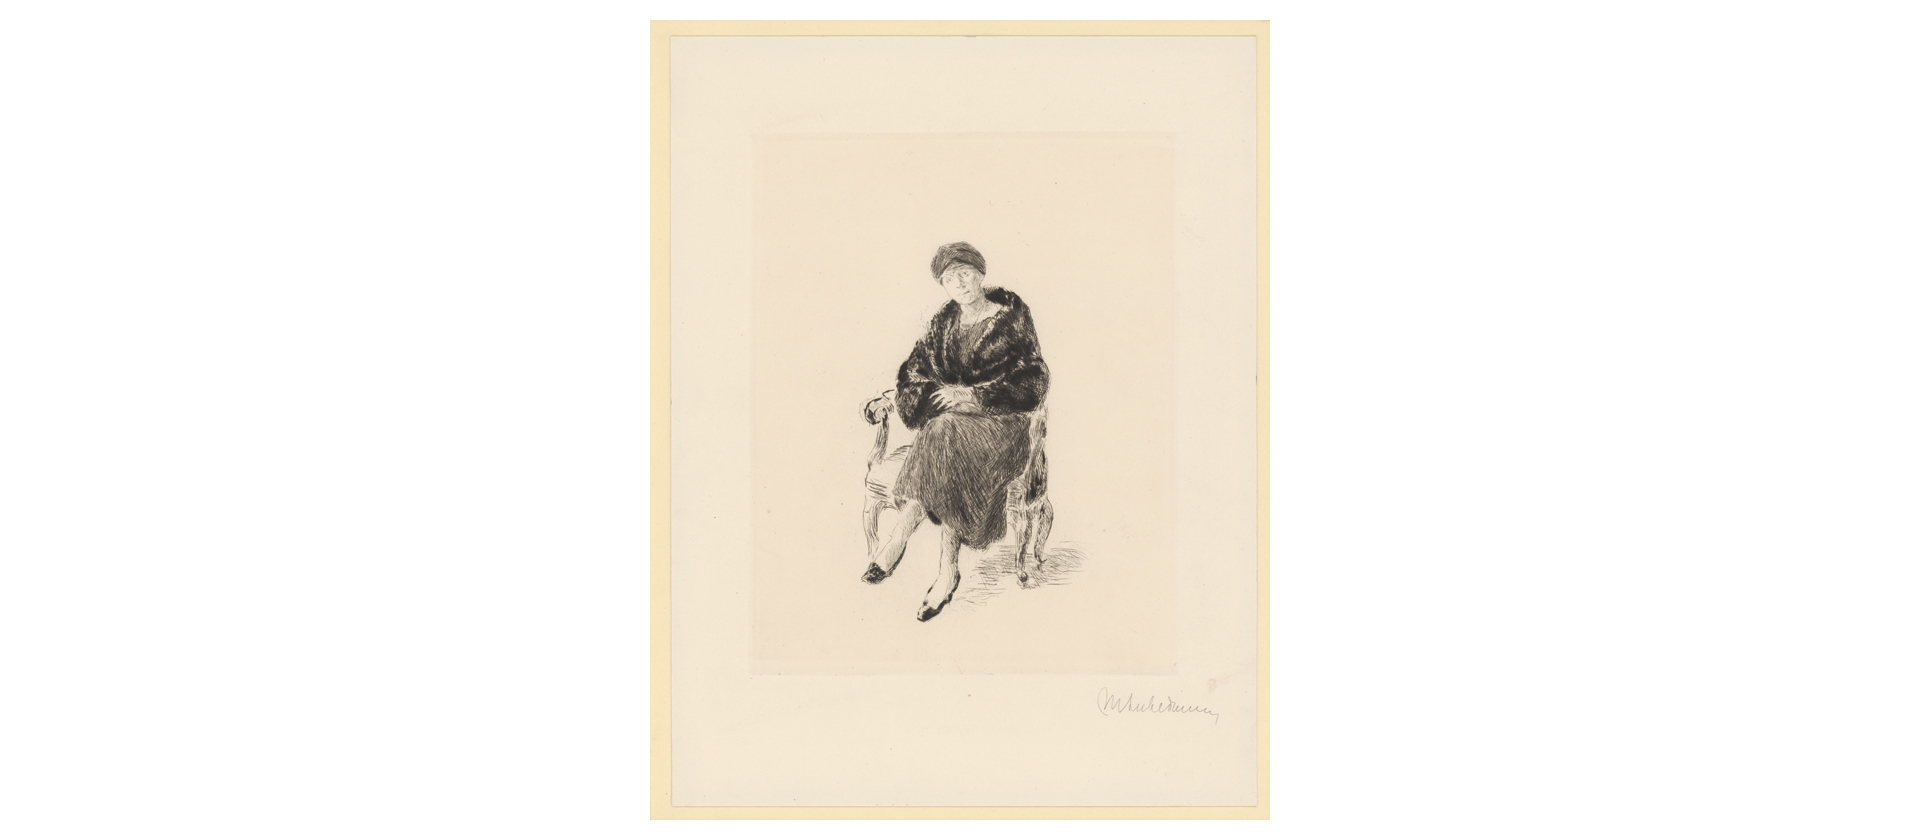 Max Liebermann, Dame mit Pelz im Lehnsessel, 1923, Radierung (Kaltnadel), 208 × 128 mm, (c) Hamburger Kunsthalle/bpk, Foto: Elke Walford